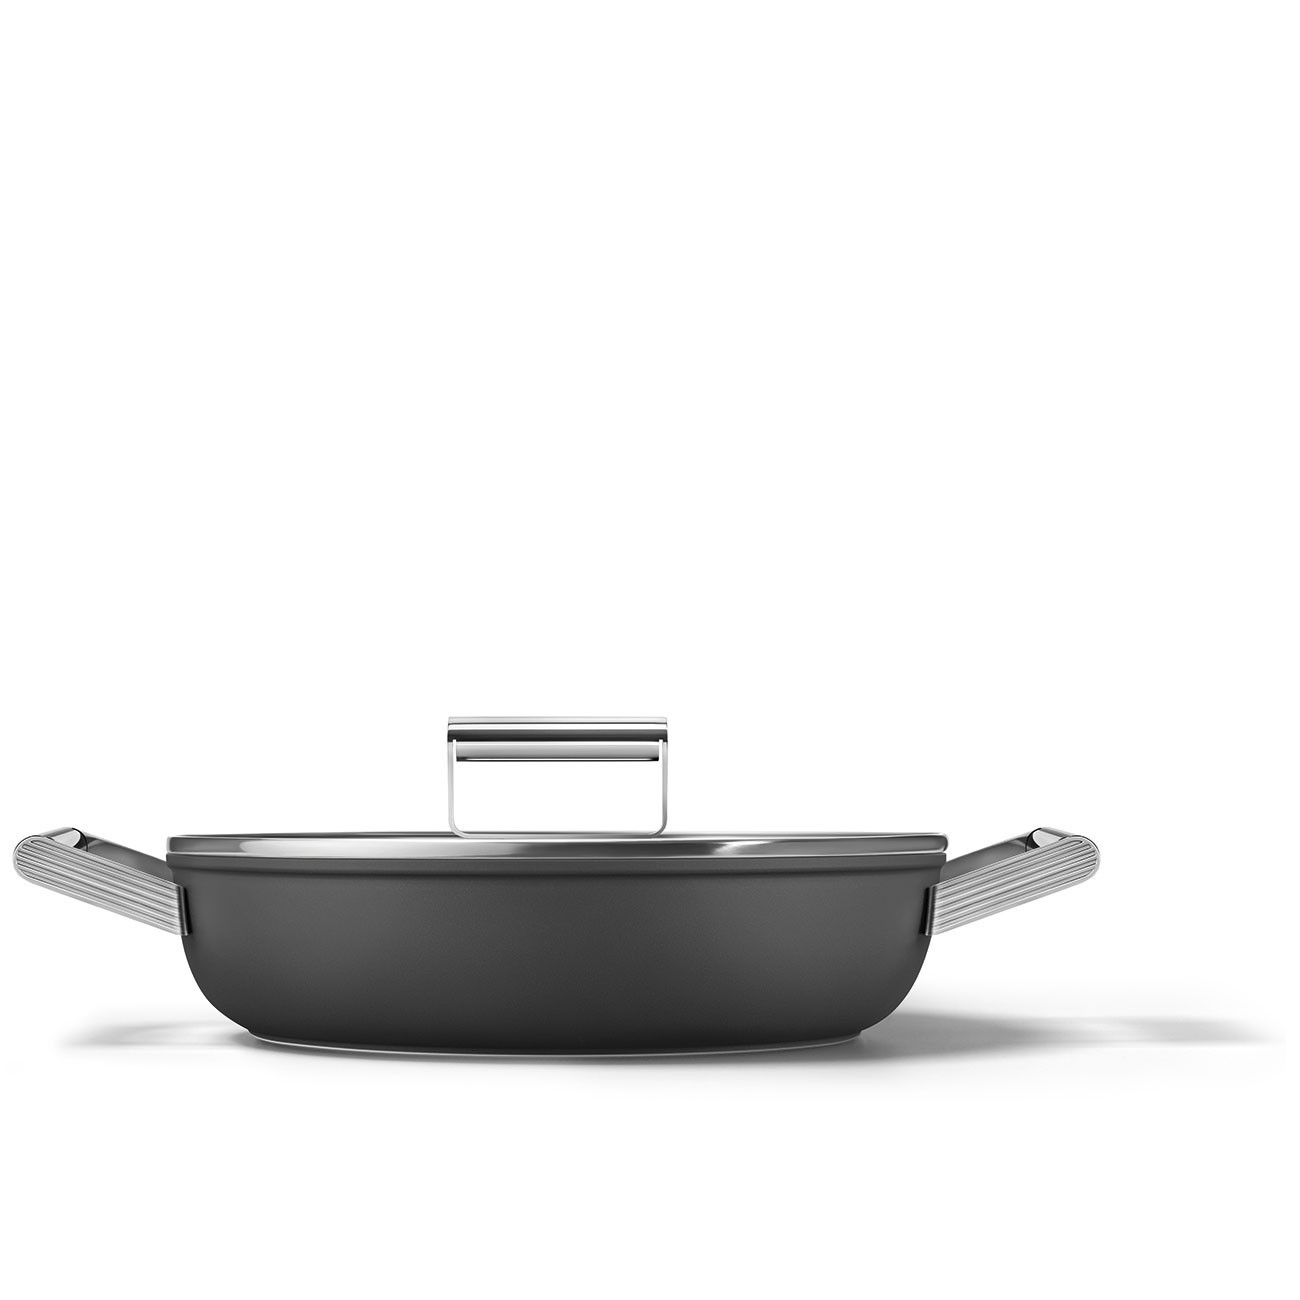 Smeg tegame antiaderente Cookware nero estetica 50's Style Ø28cm - Candida  Celiento